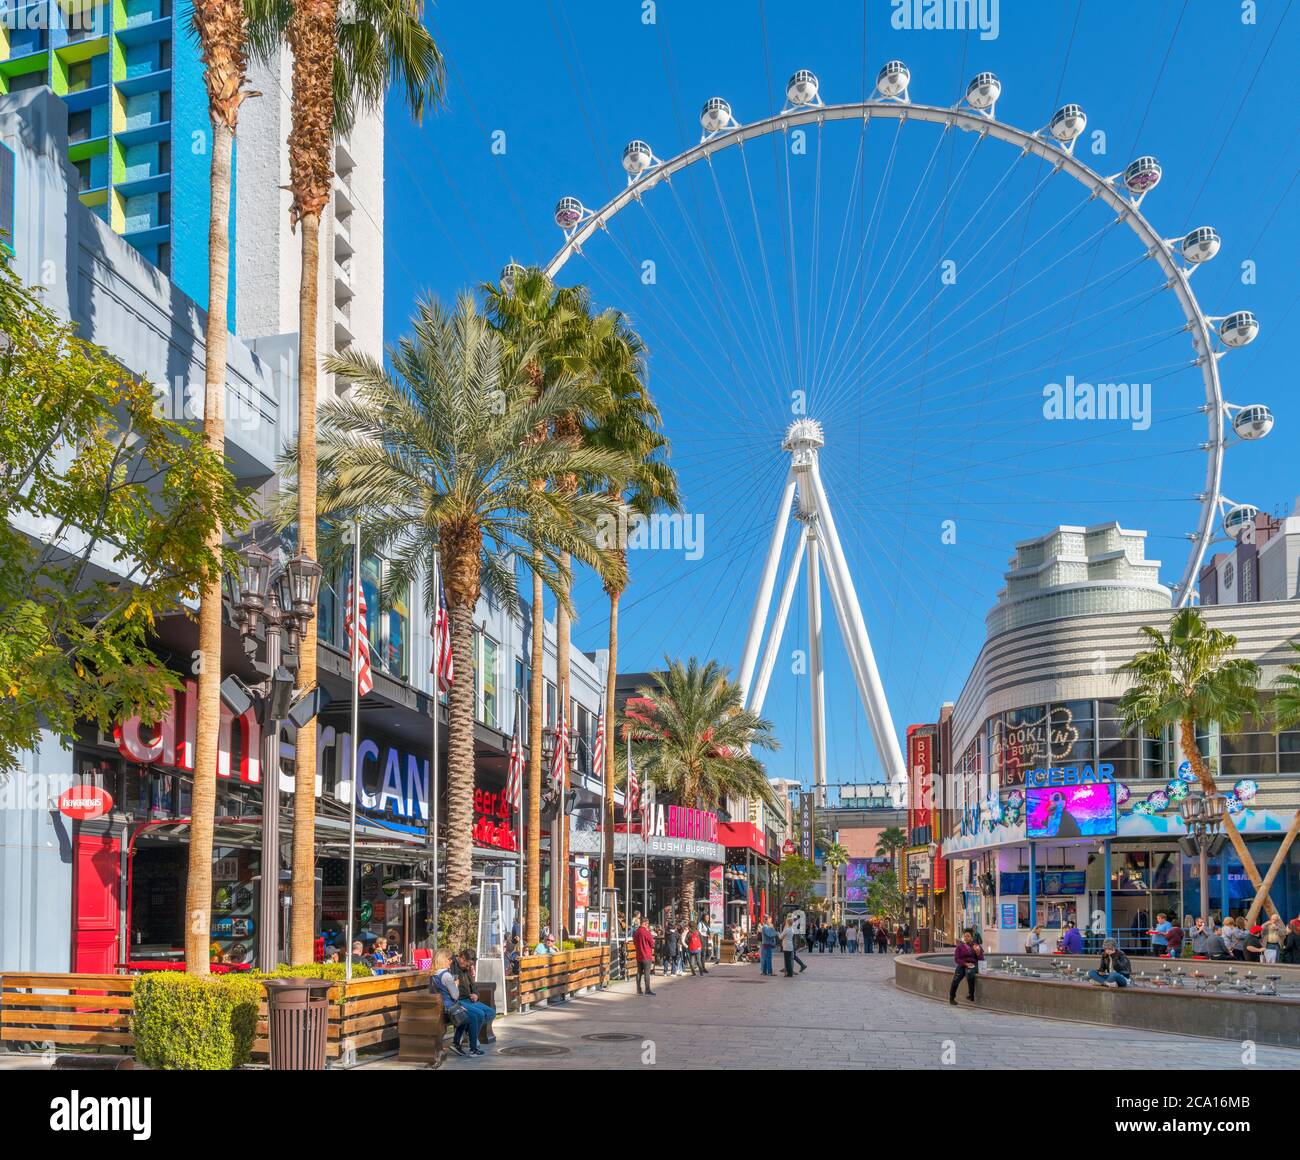 High Roller, Las Vegas. Shops, bars and restaurants on The Linq Promenade looking towards the High Roller ferris wheel, Las Vegas, Nevada, USA Stock Photo